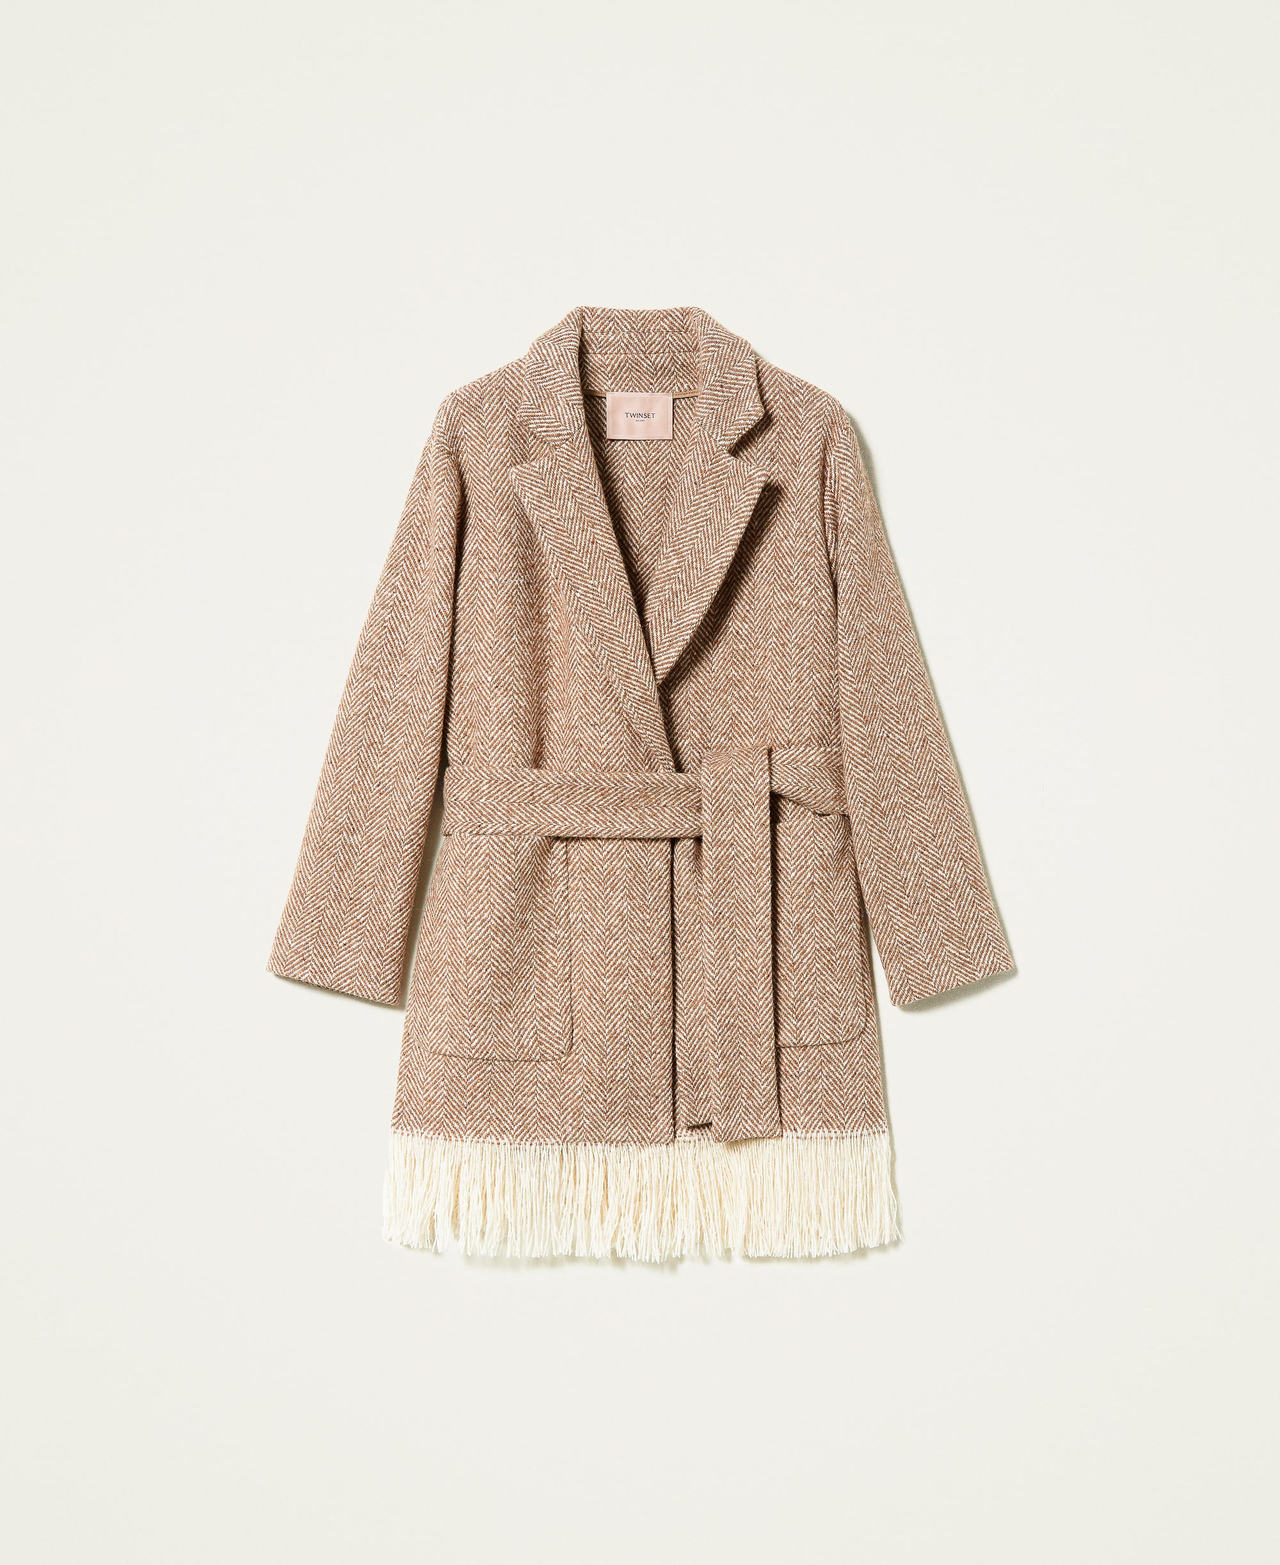 Chevron wool cloth coat with fringes at the hem "Rum” Brown / “Snow” White Herringbone Woman 212TP2611-0S